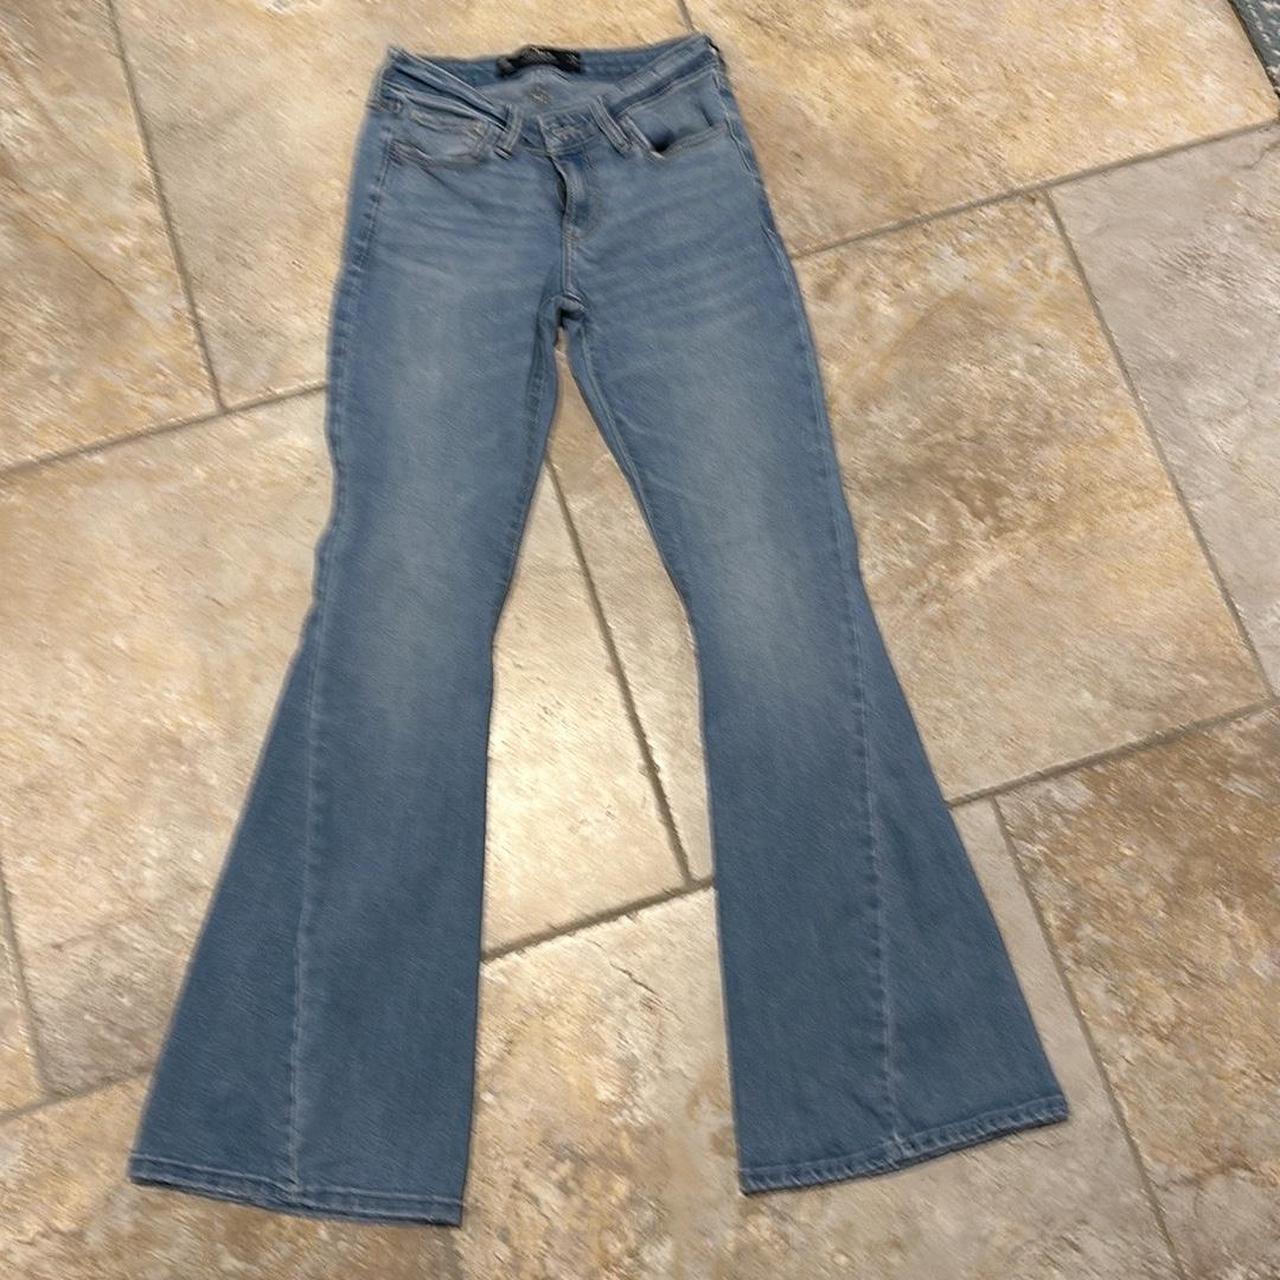 Y2K low rise flare jeans - Depop